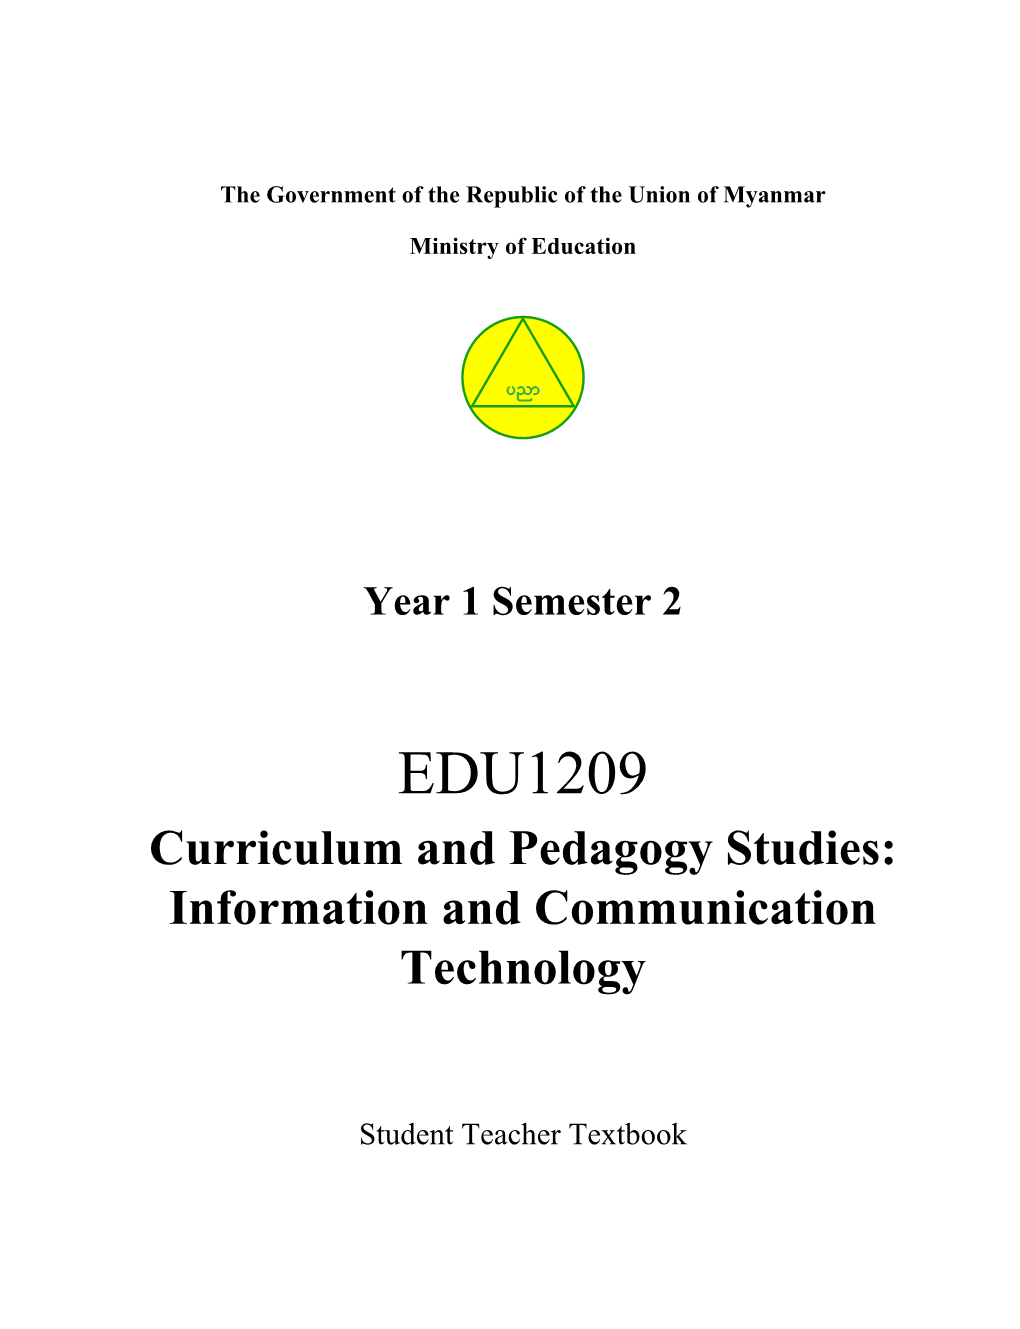 EDU1209 Curriculum and Pedagogy Studies: Information and Communication Technology